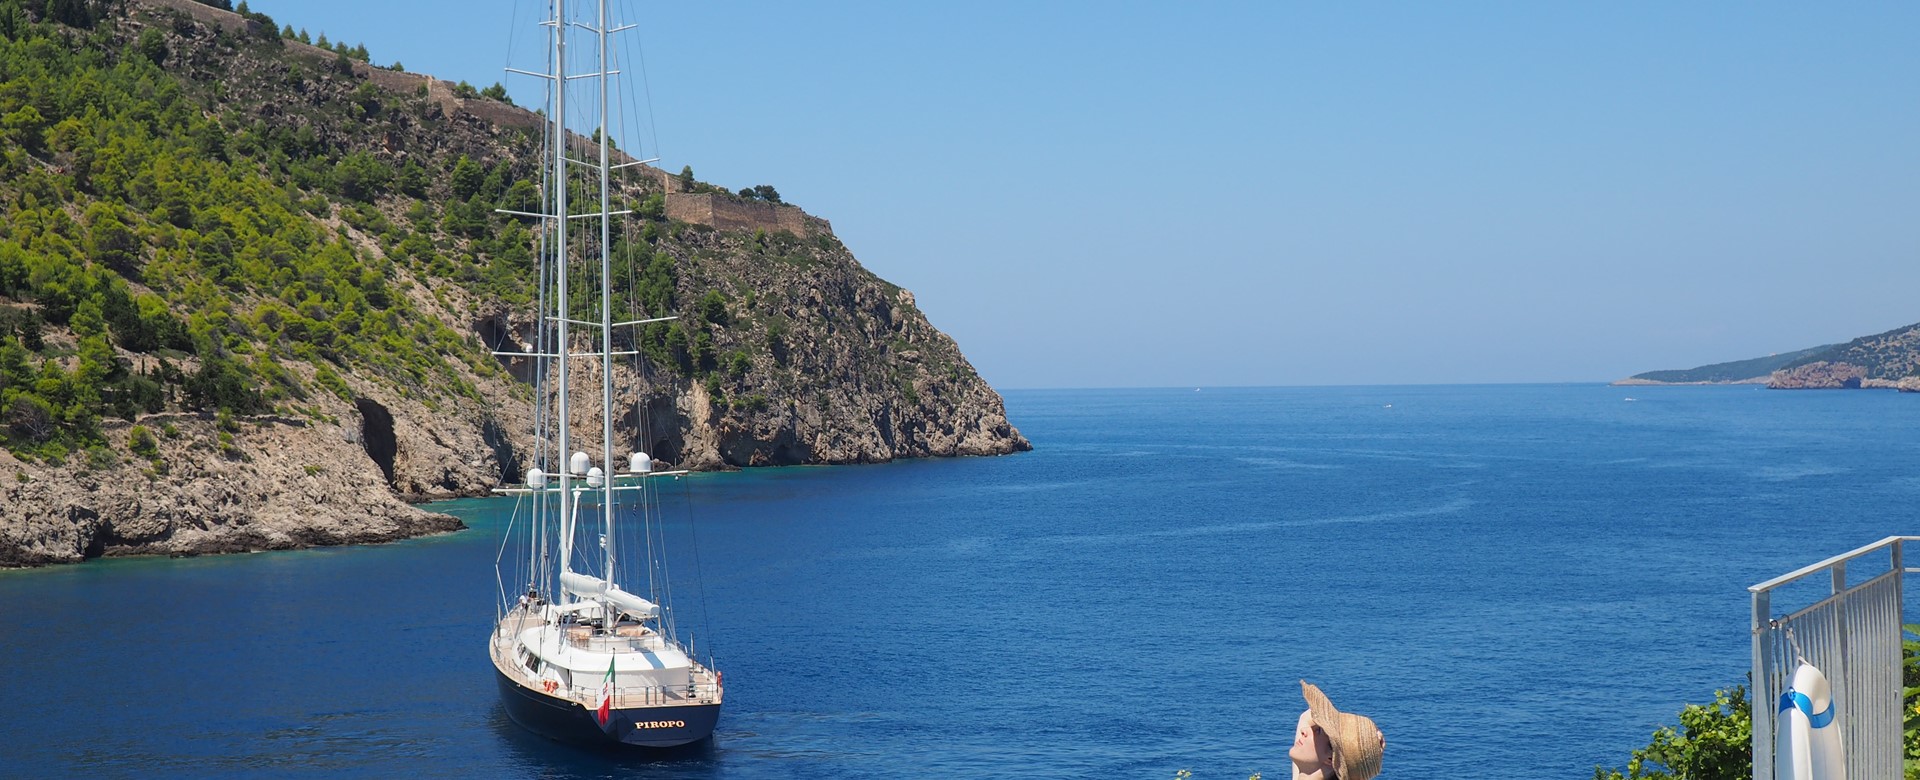 Sun, sea, yachts, infinity pool and great views, Villa Plori has it all